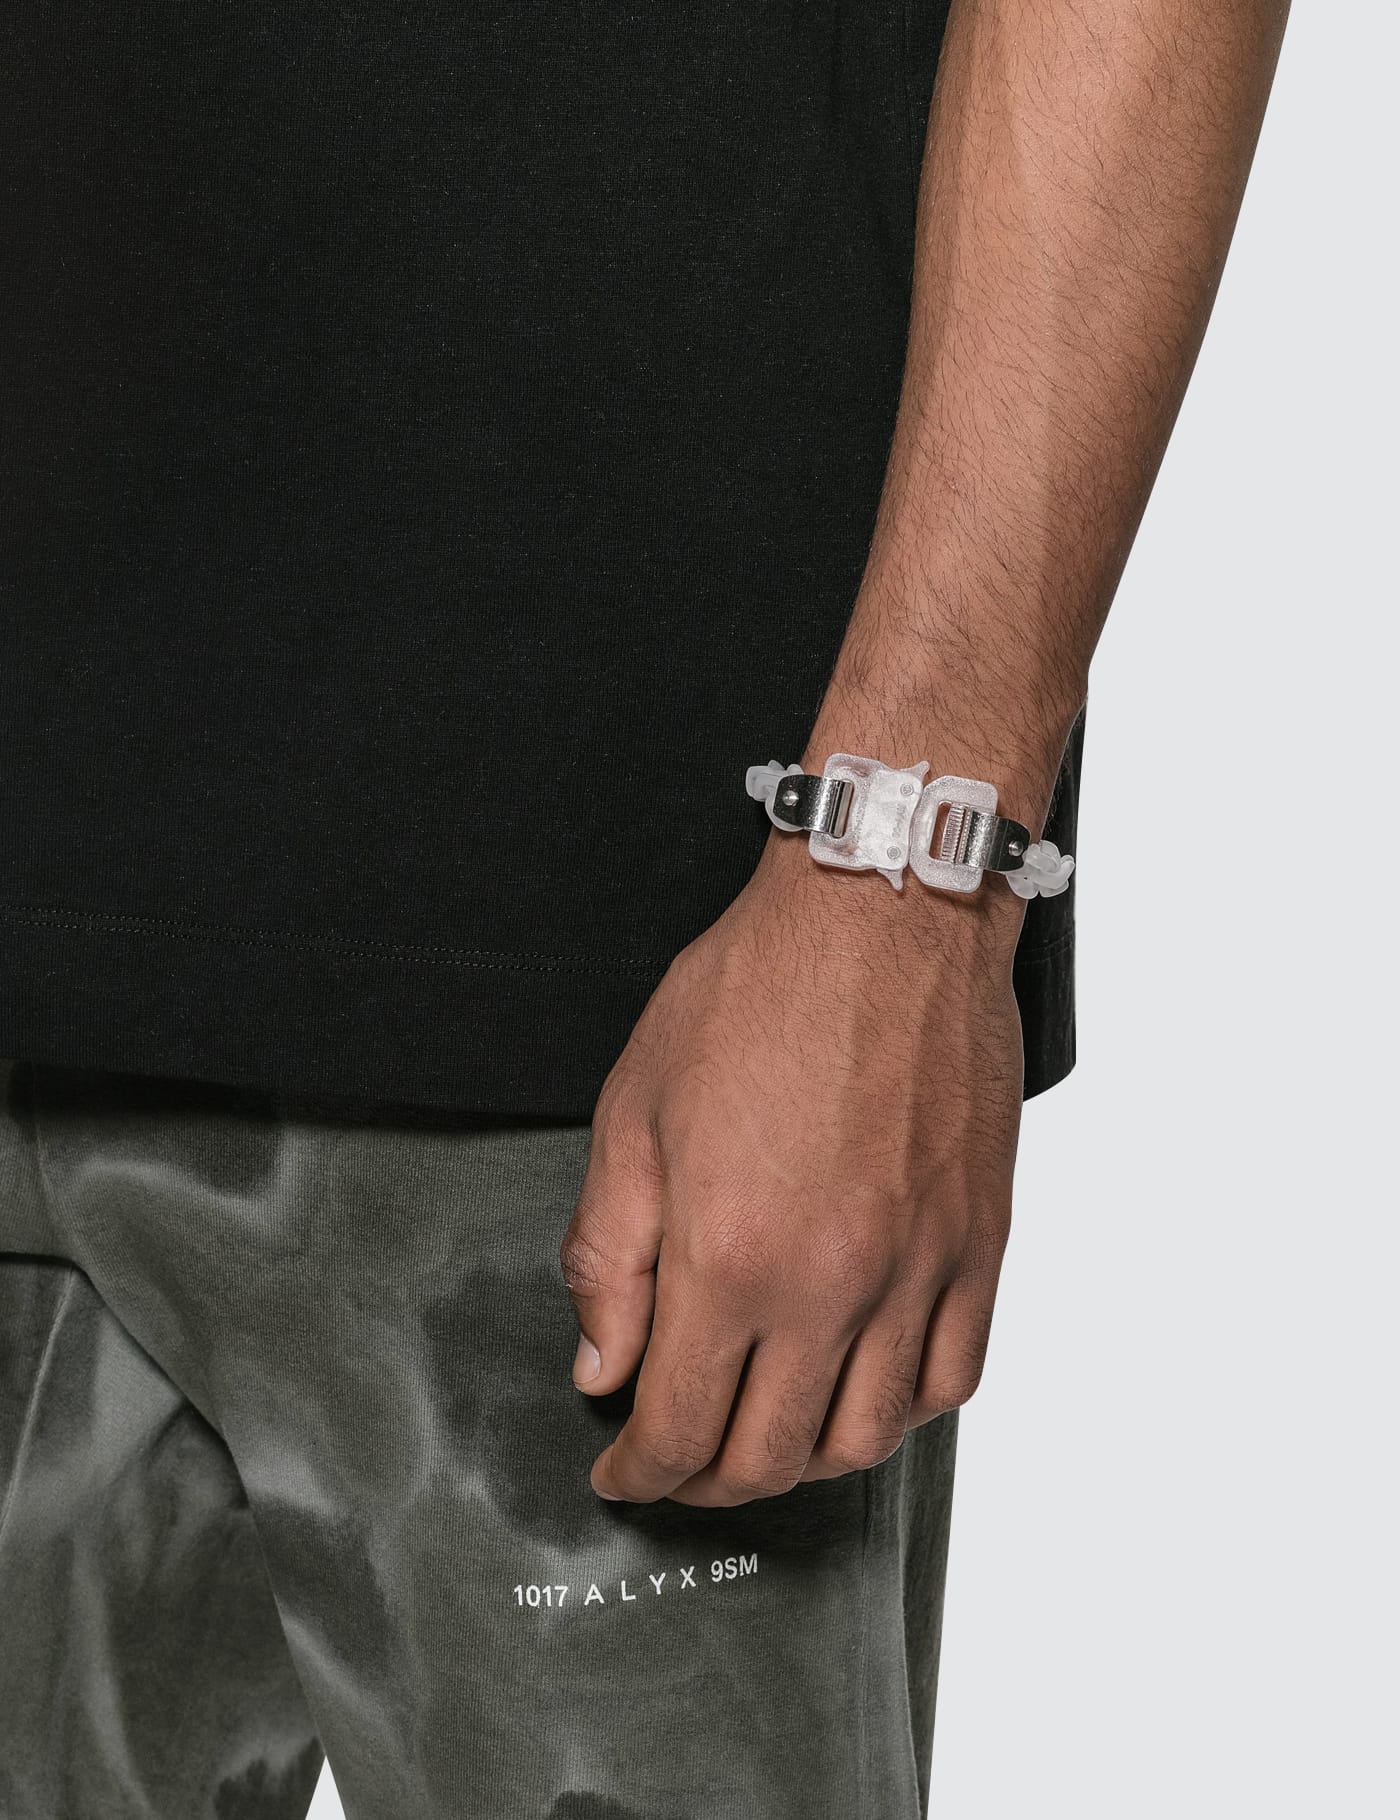 1017 ALYX 9SM - Transparent Chain Bracelet | HBX - Globally